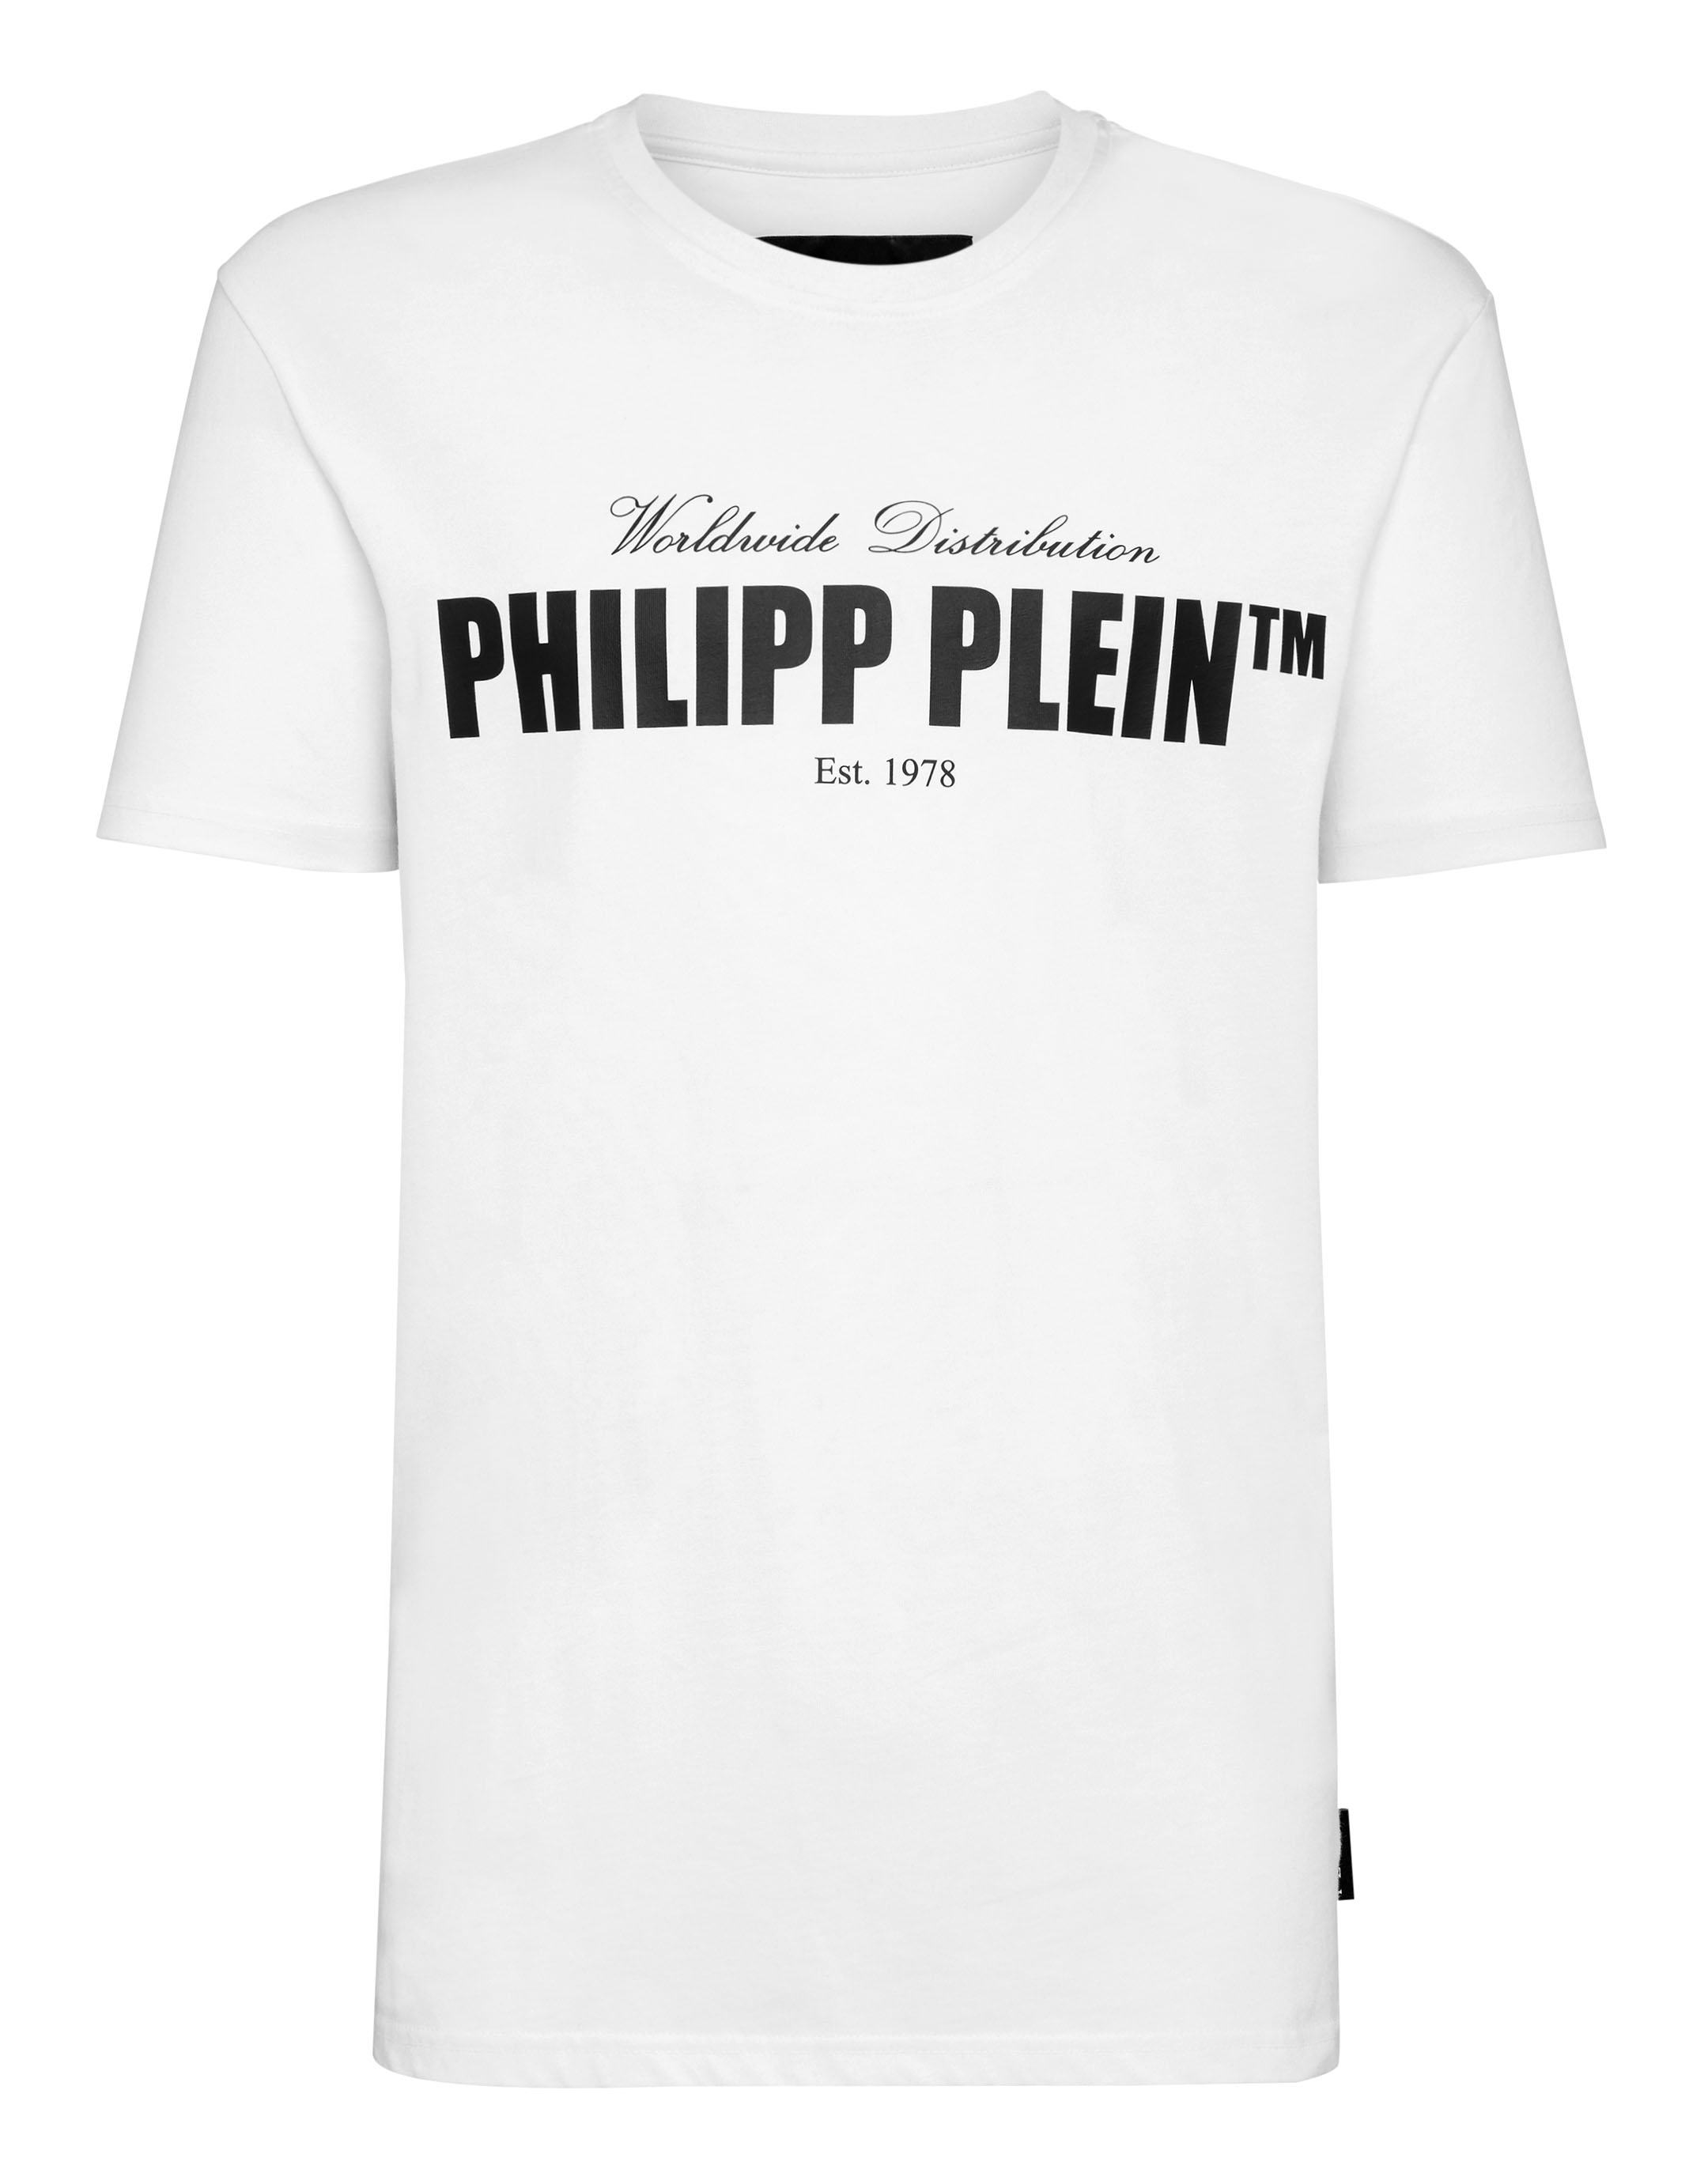 philipp plein t shirt black